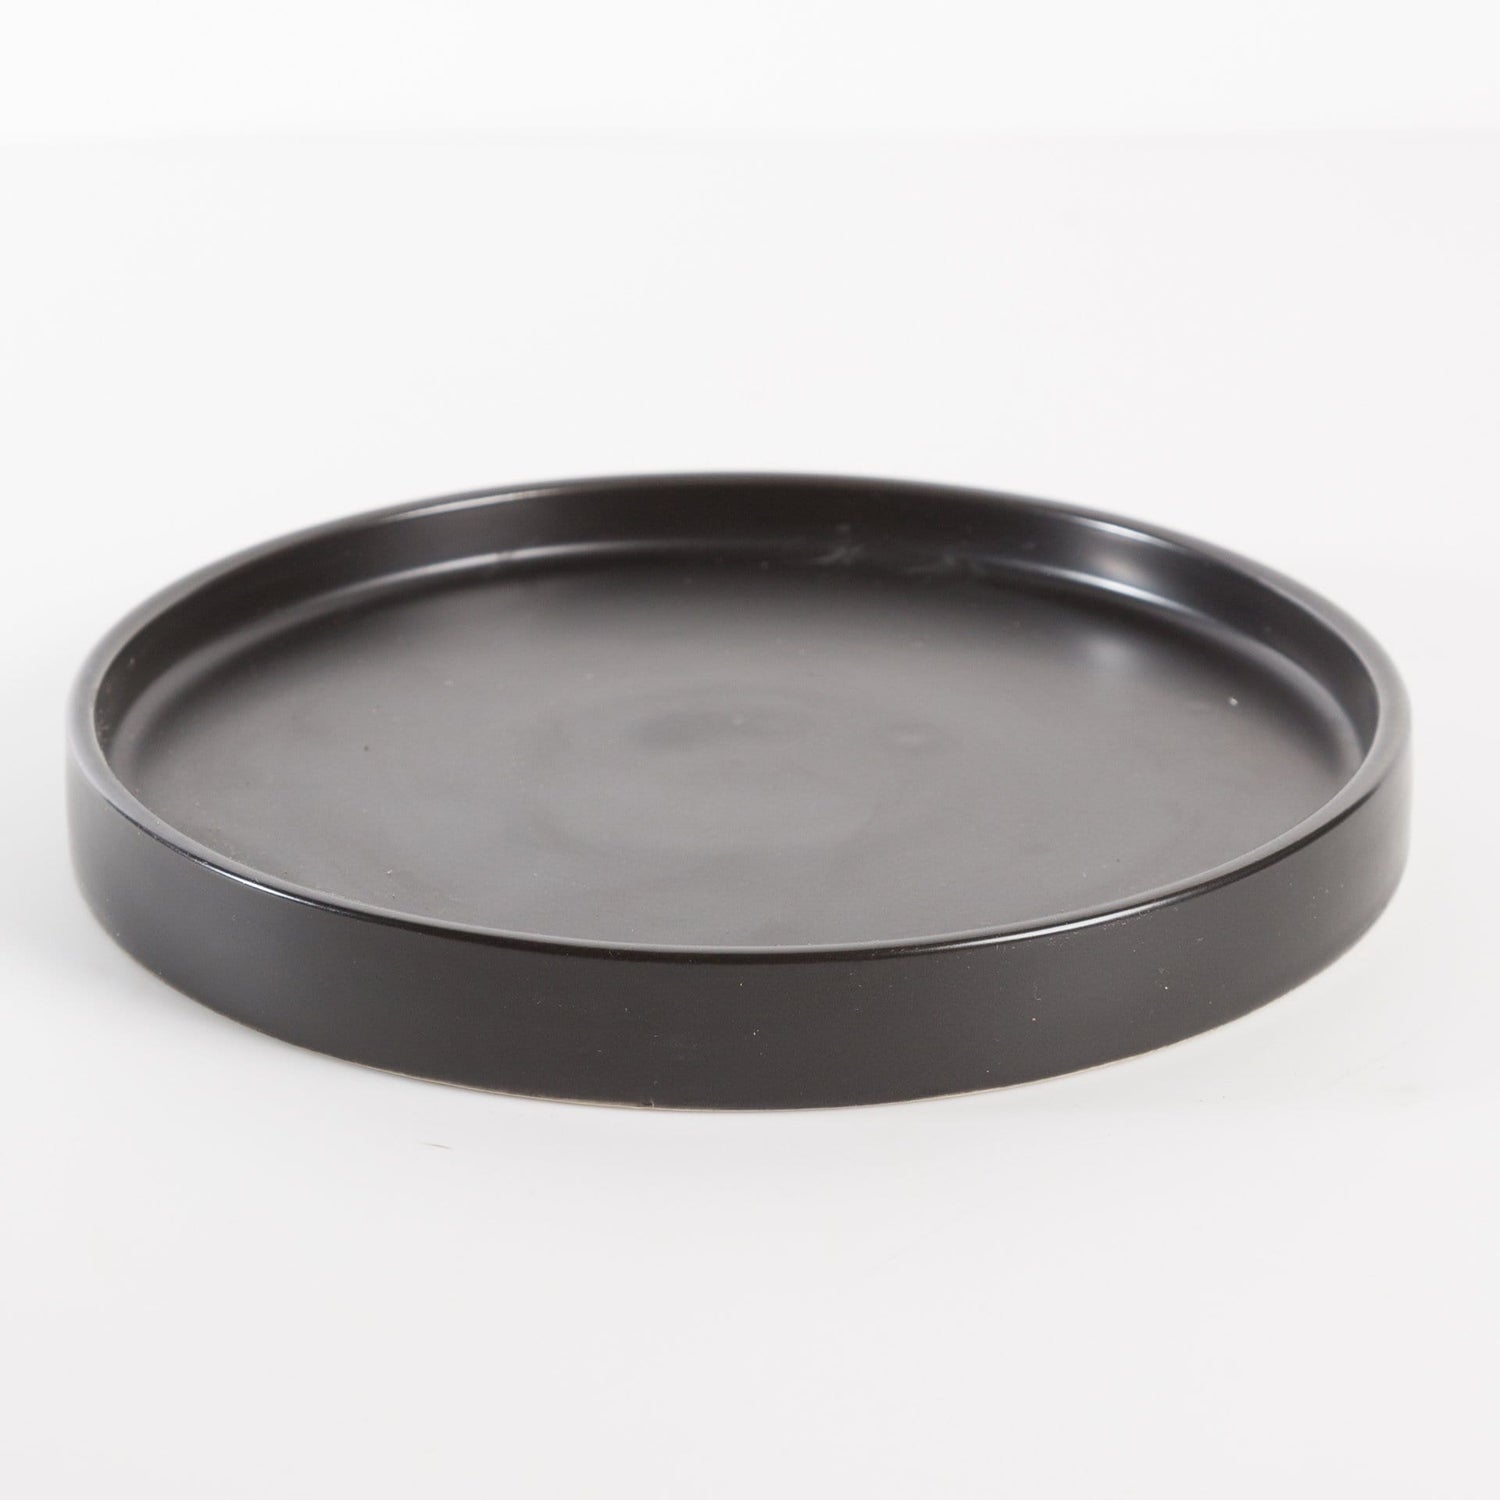 Washington Pottery Company Saucer 7.25" / Matte Black Essential Saucer